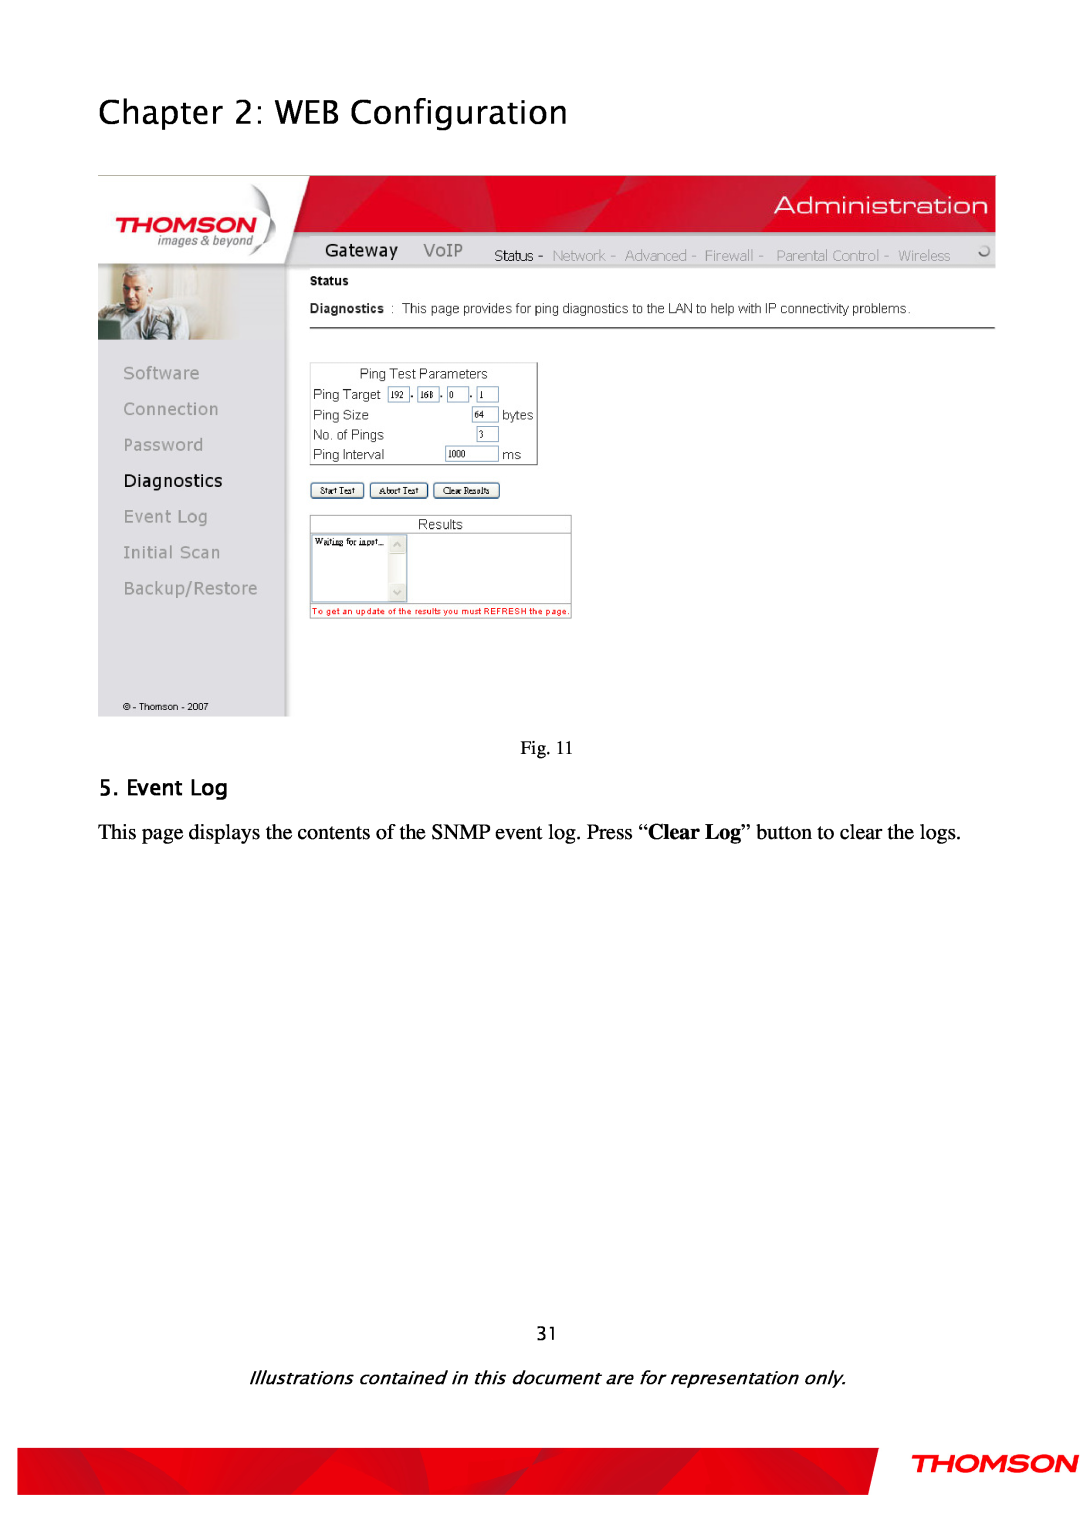 Gateway TWG870 user manual WEB Configuration, Event Log, Fig 